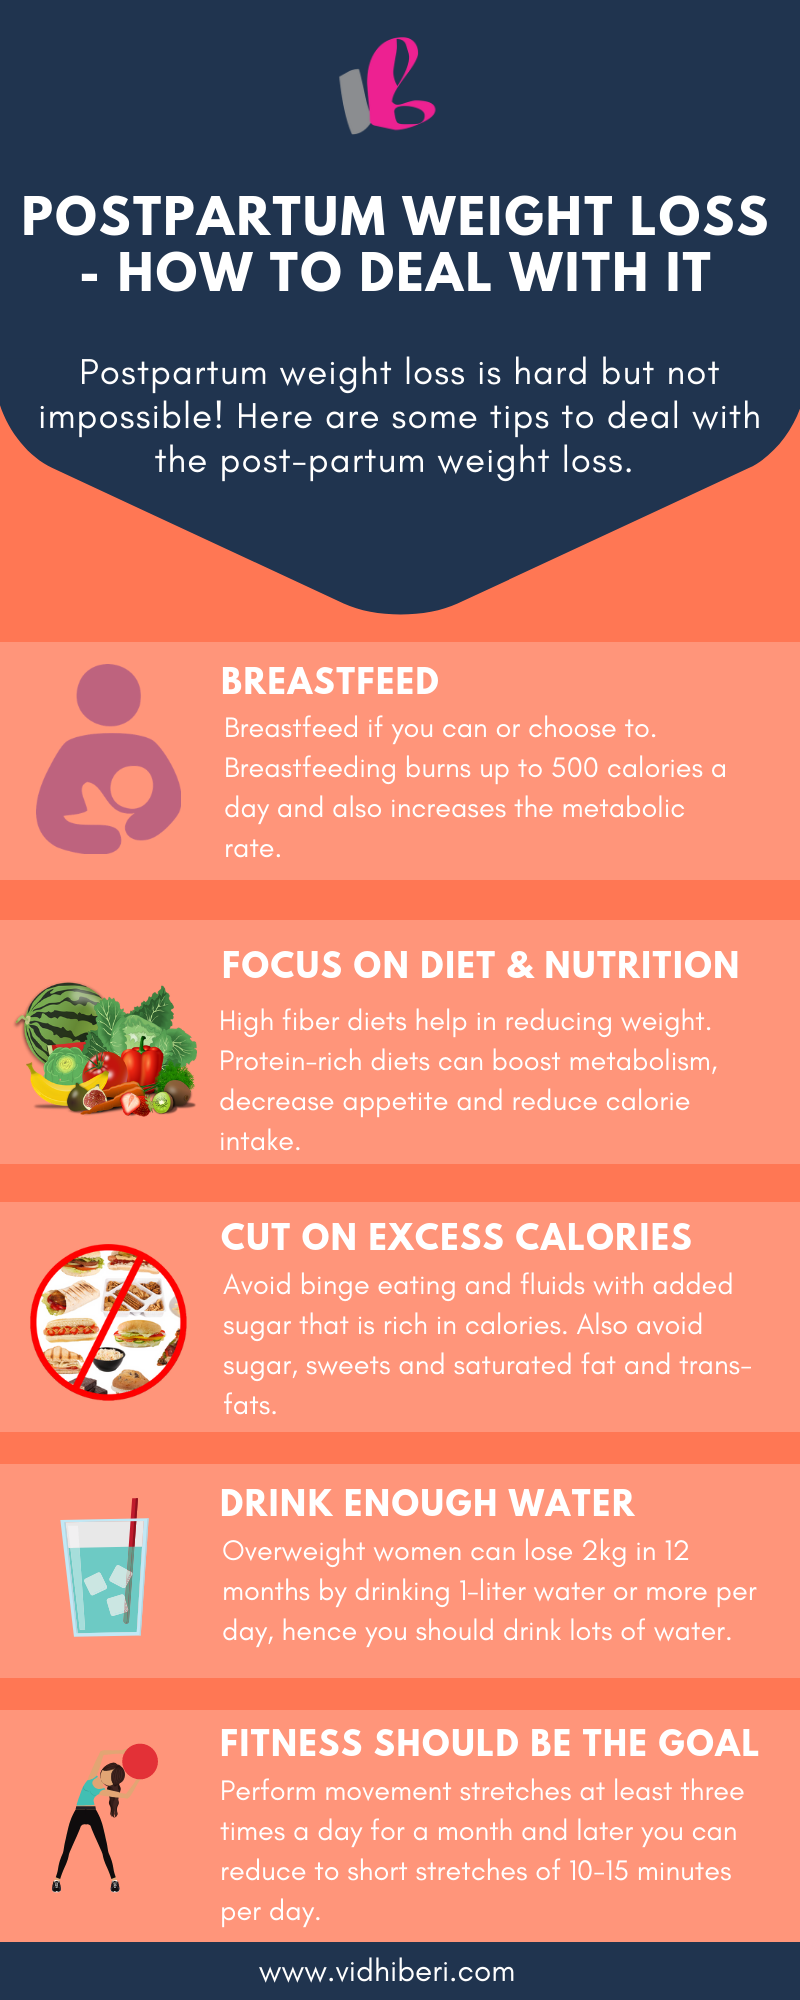 Postpartum weight loss tips